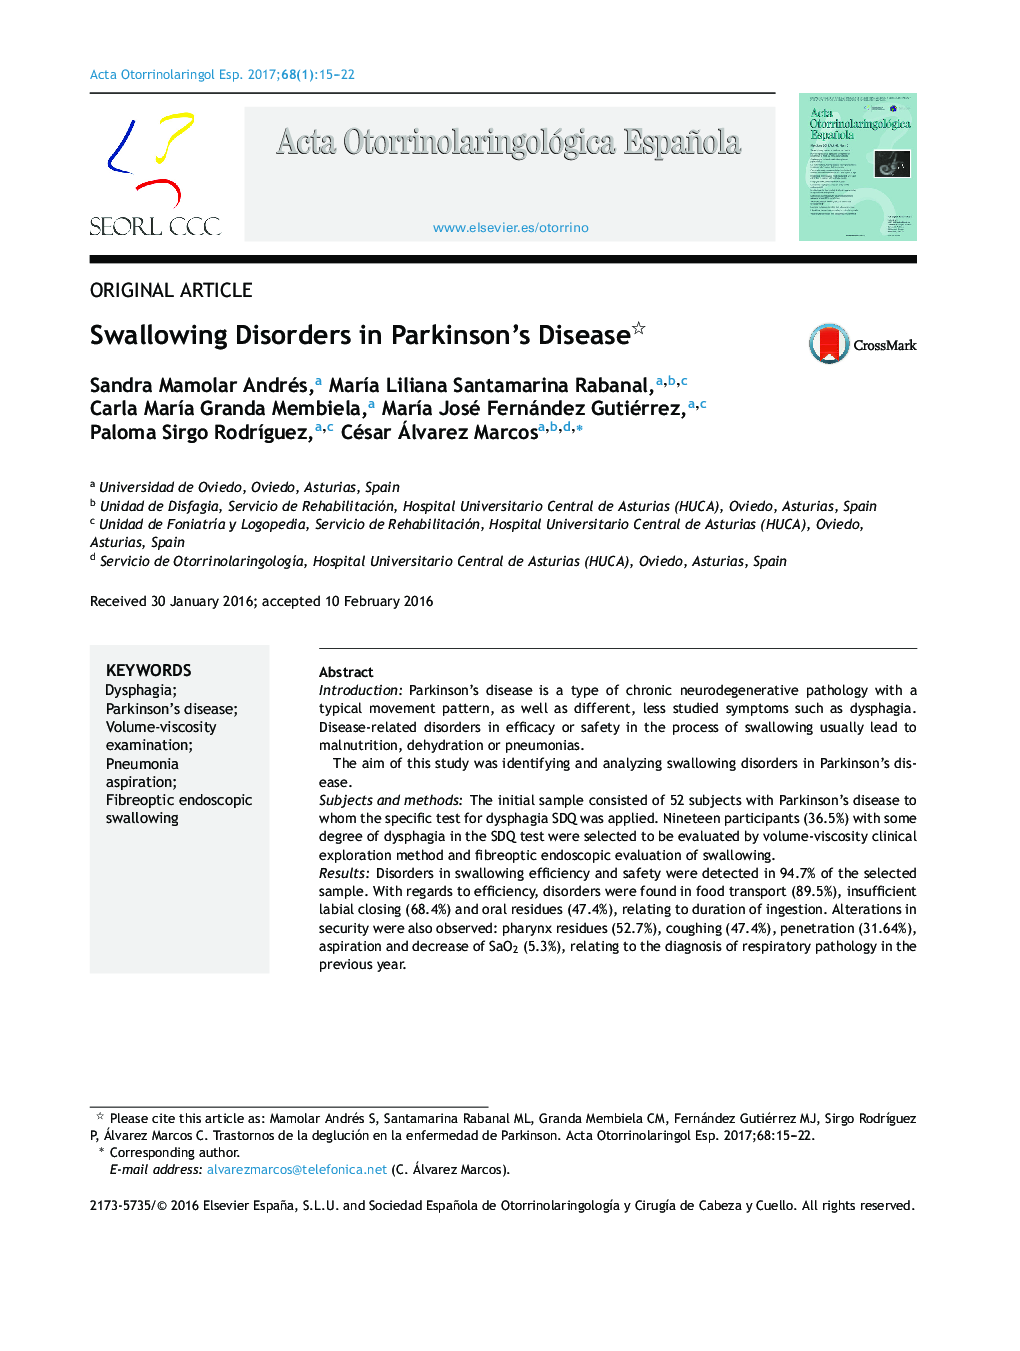 Swallowing Disorders in Parkinson's Disease